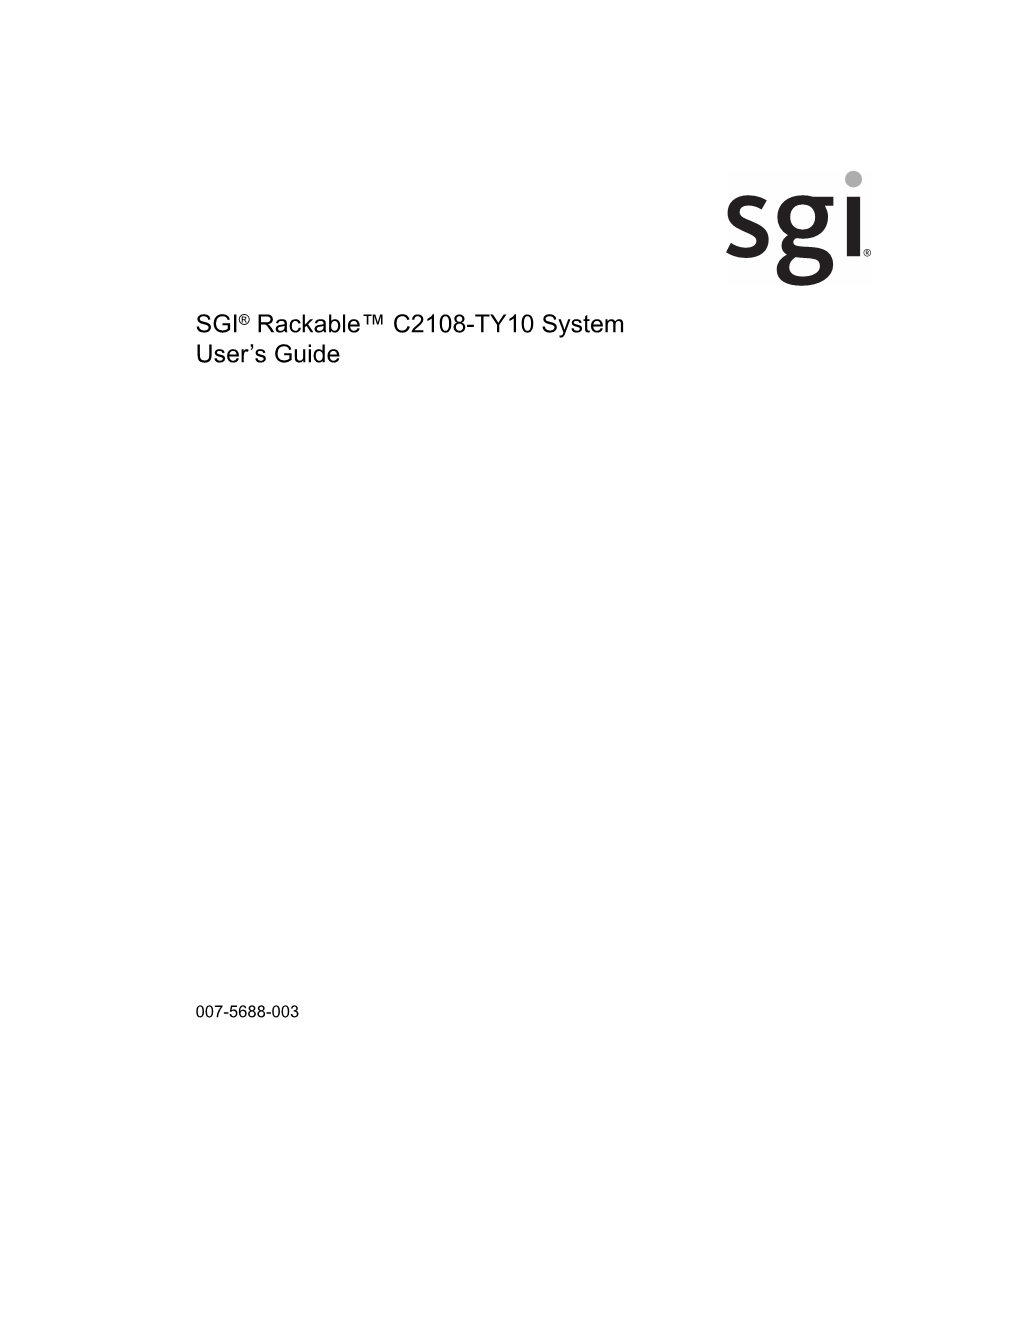 SGI® Rackable™ C2108-TY10 System User's Guide